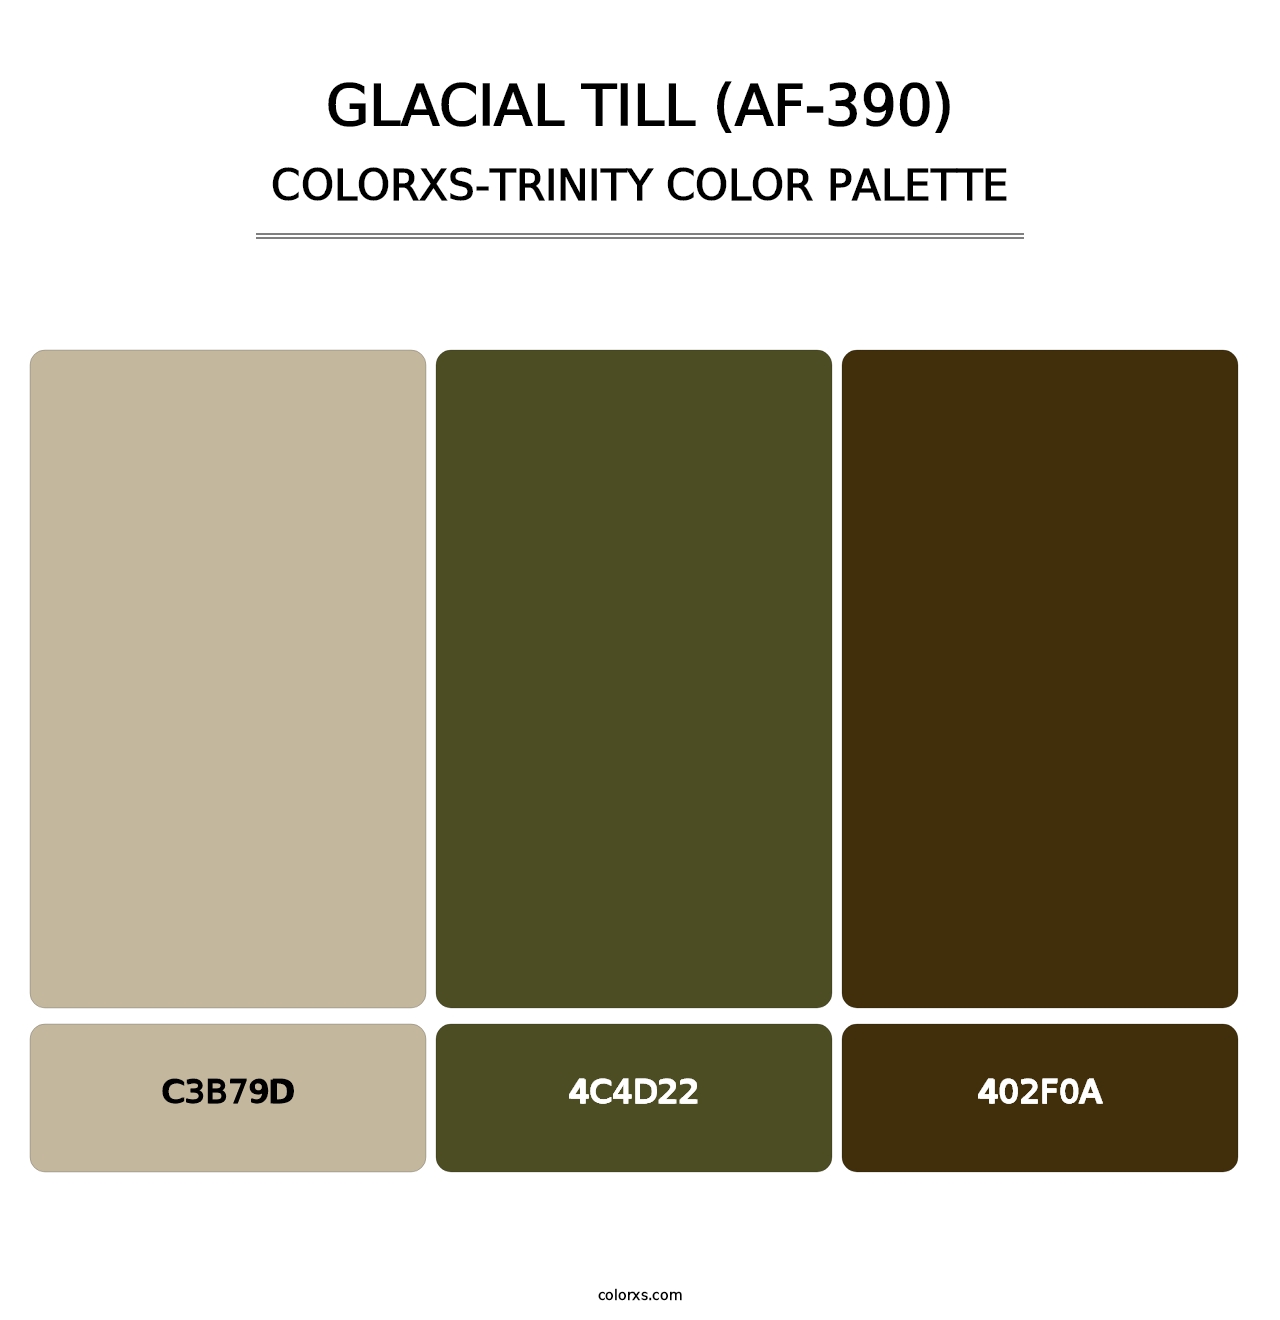 Glacial Till (AF-390) - Colorxs Trinity Palette